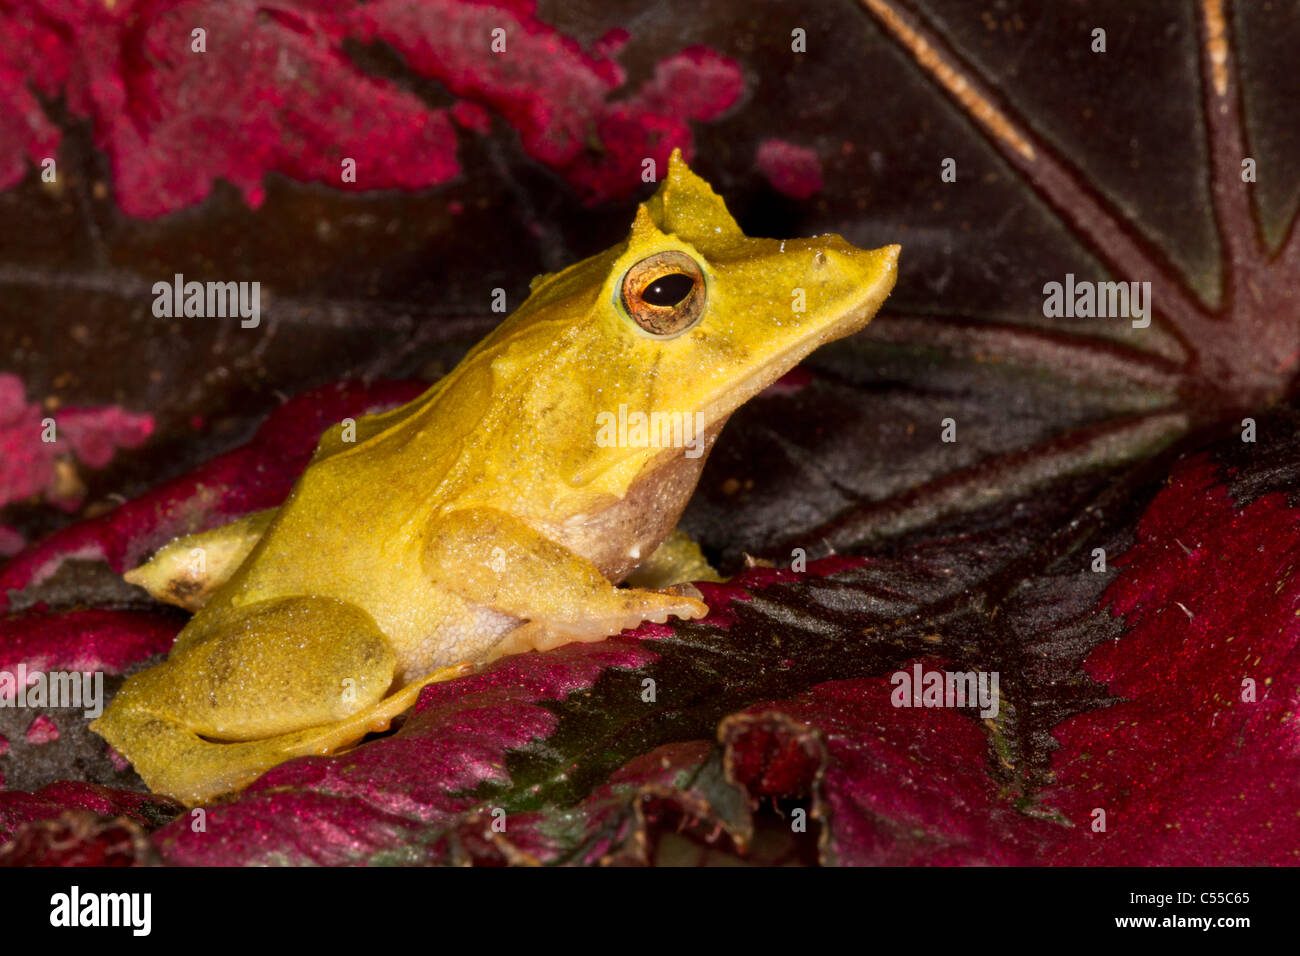 Solomon island eyelash frog hi-res stock photography and images - Alamy